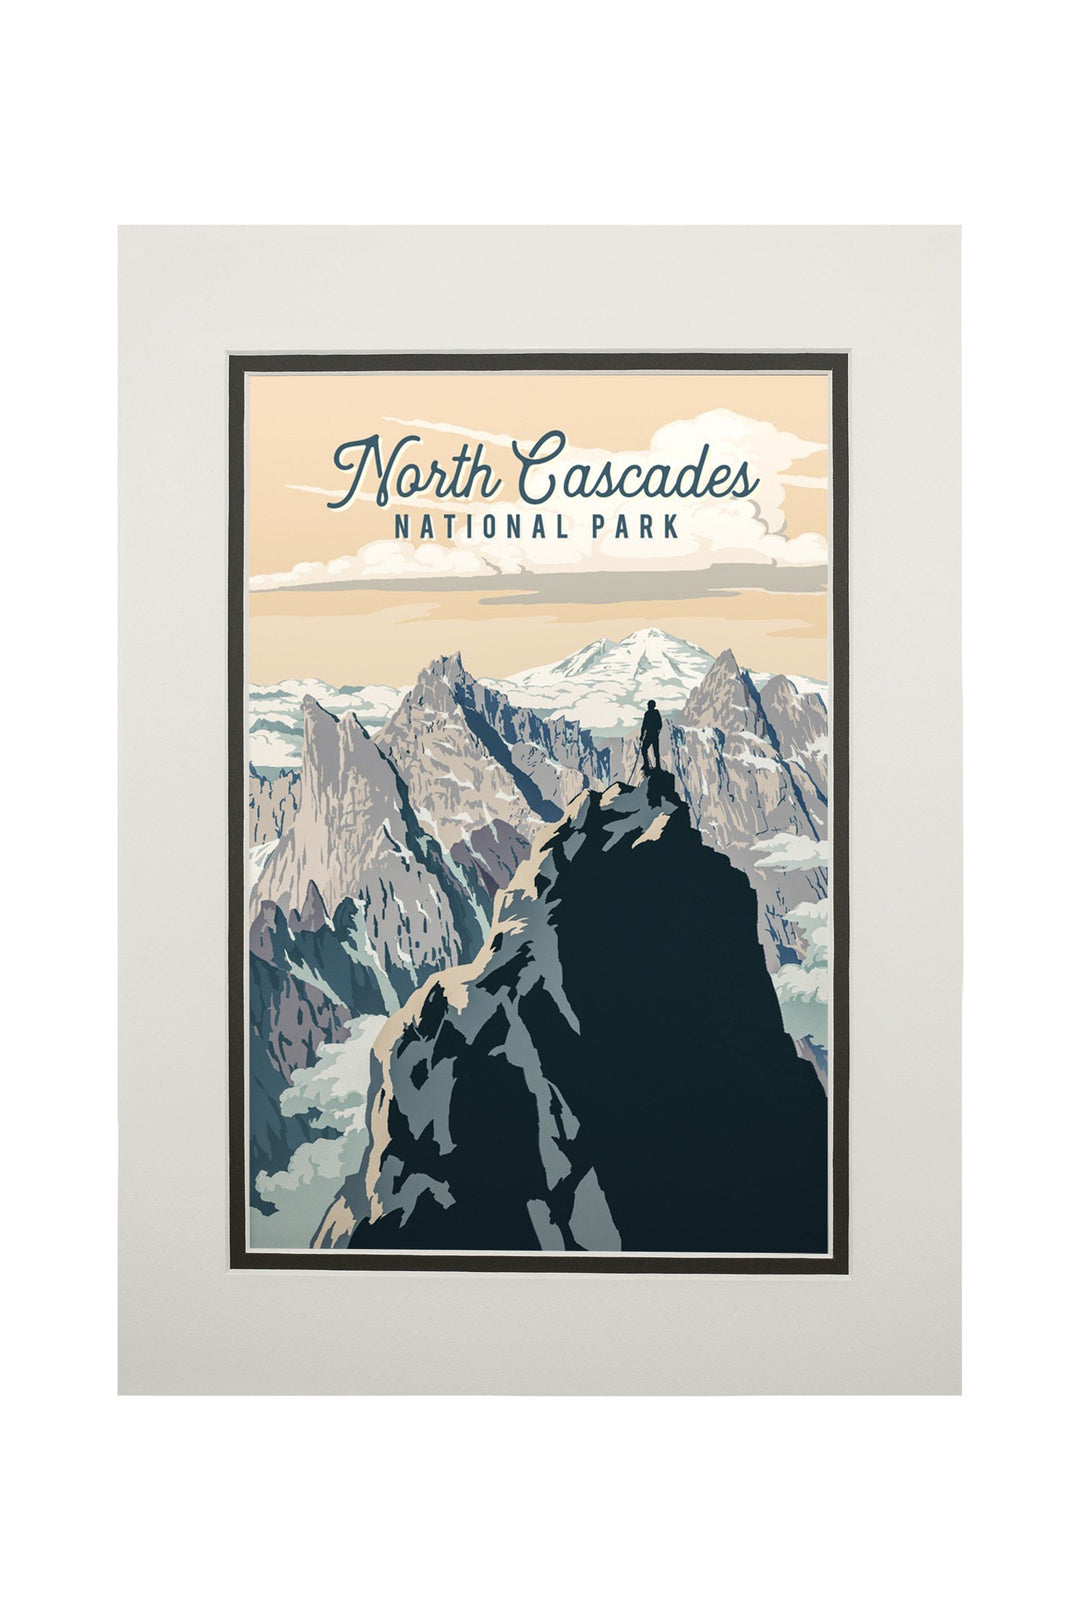 North Cascades National Park, Washington, Painterly National Park Series, Art Prints and Metal Signs Art Lantern Press 11 x 14 Matted Art Print 